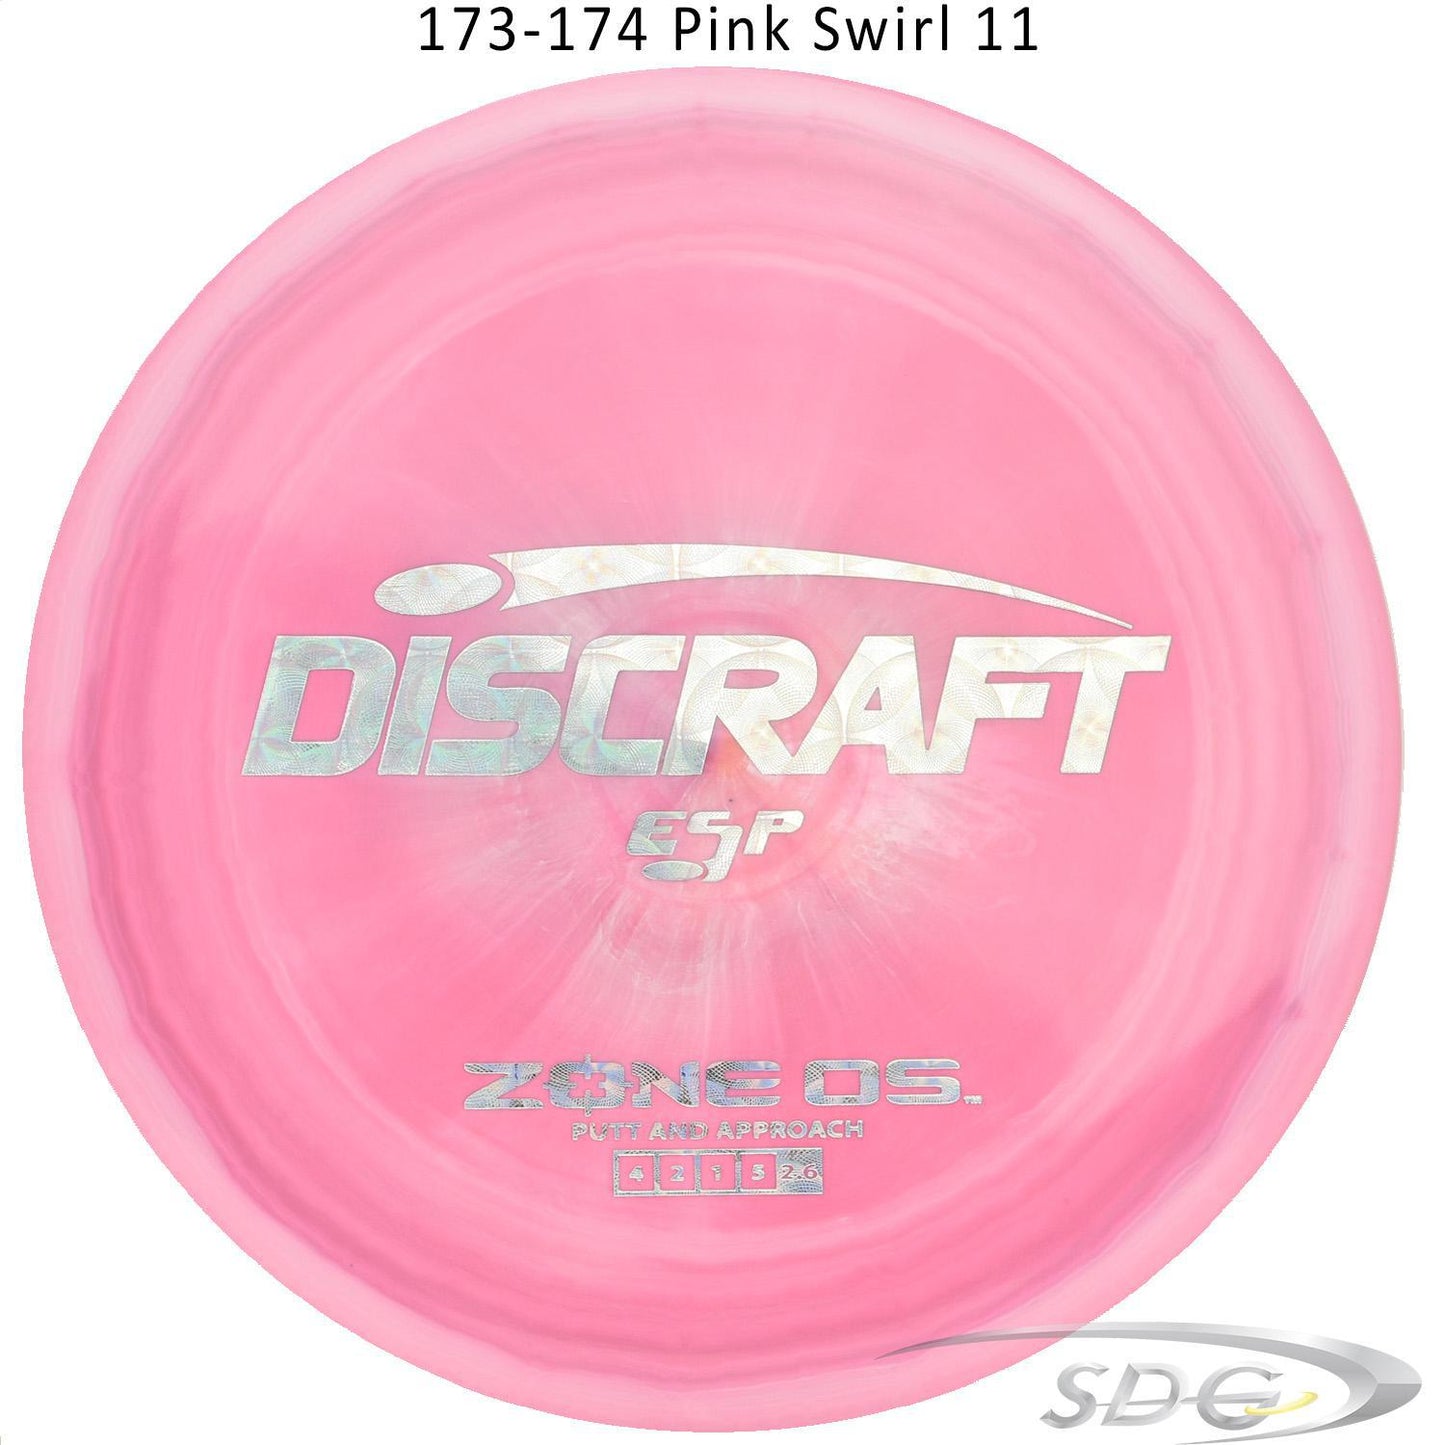 discraft-esp-zone-os-disc-golf-putter 173-174 Pink Swirl 11 